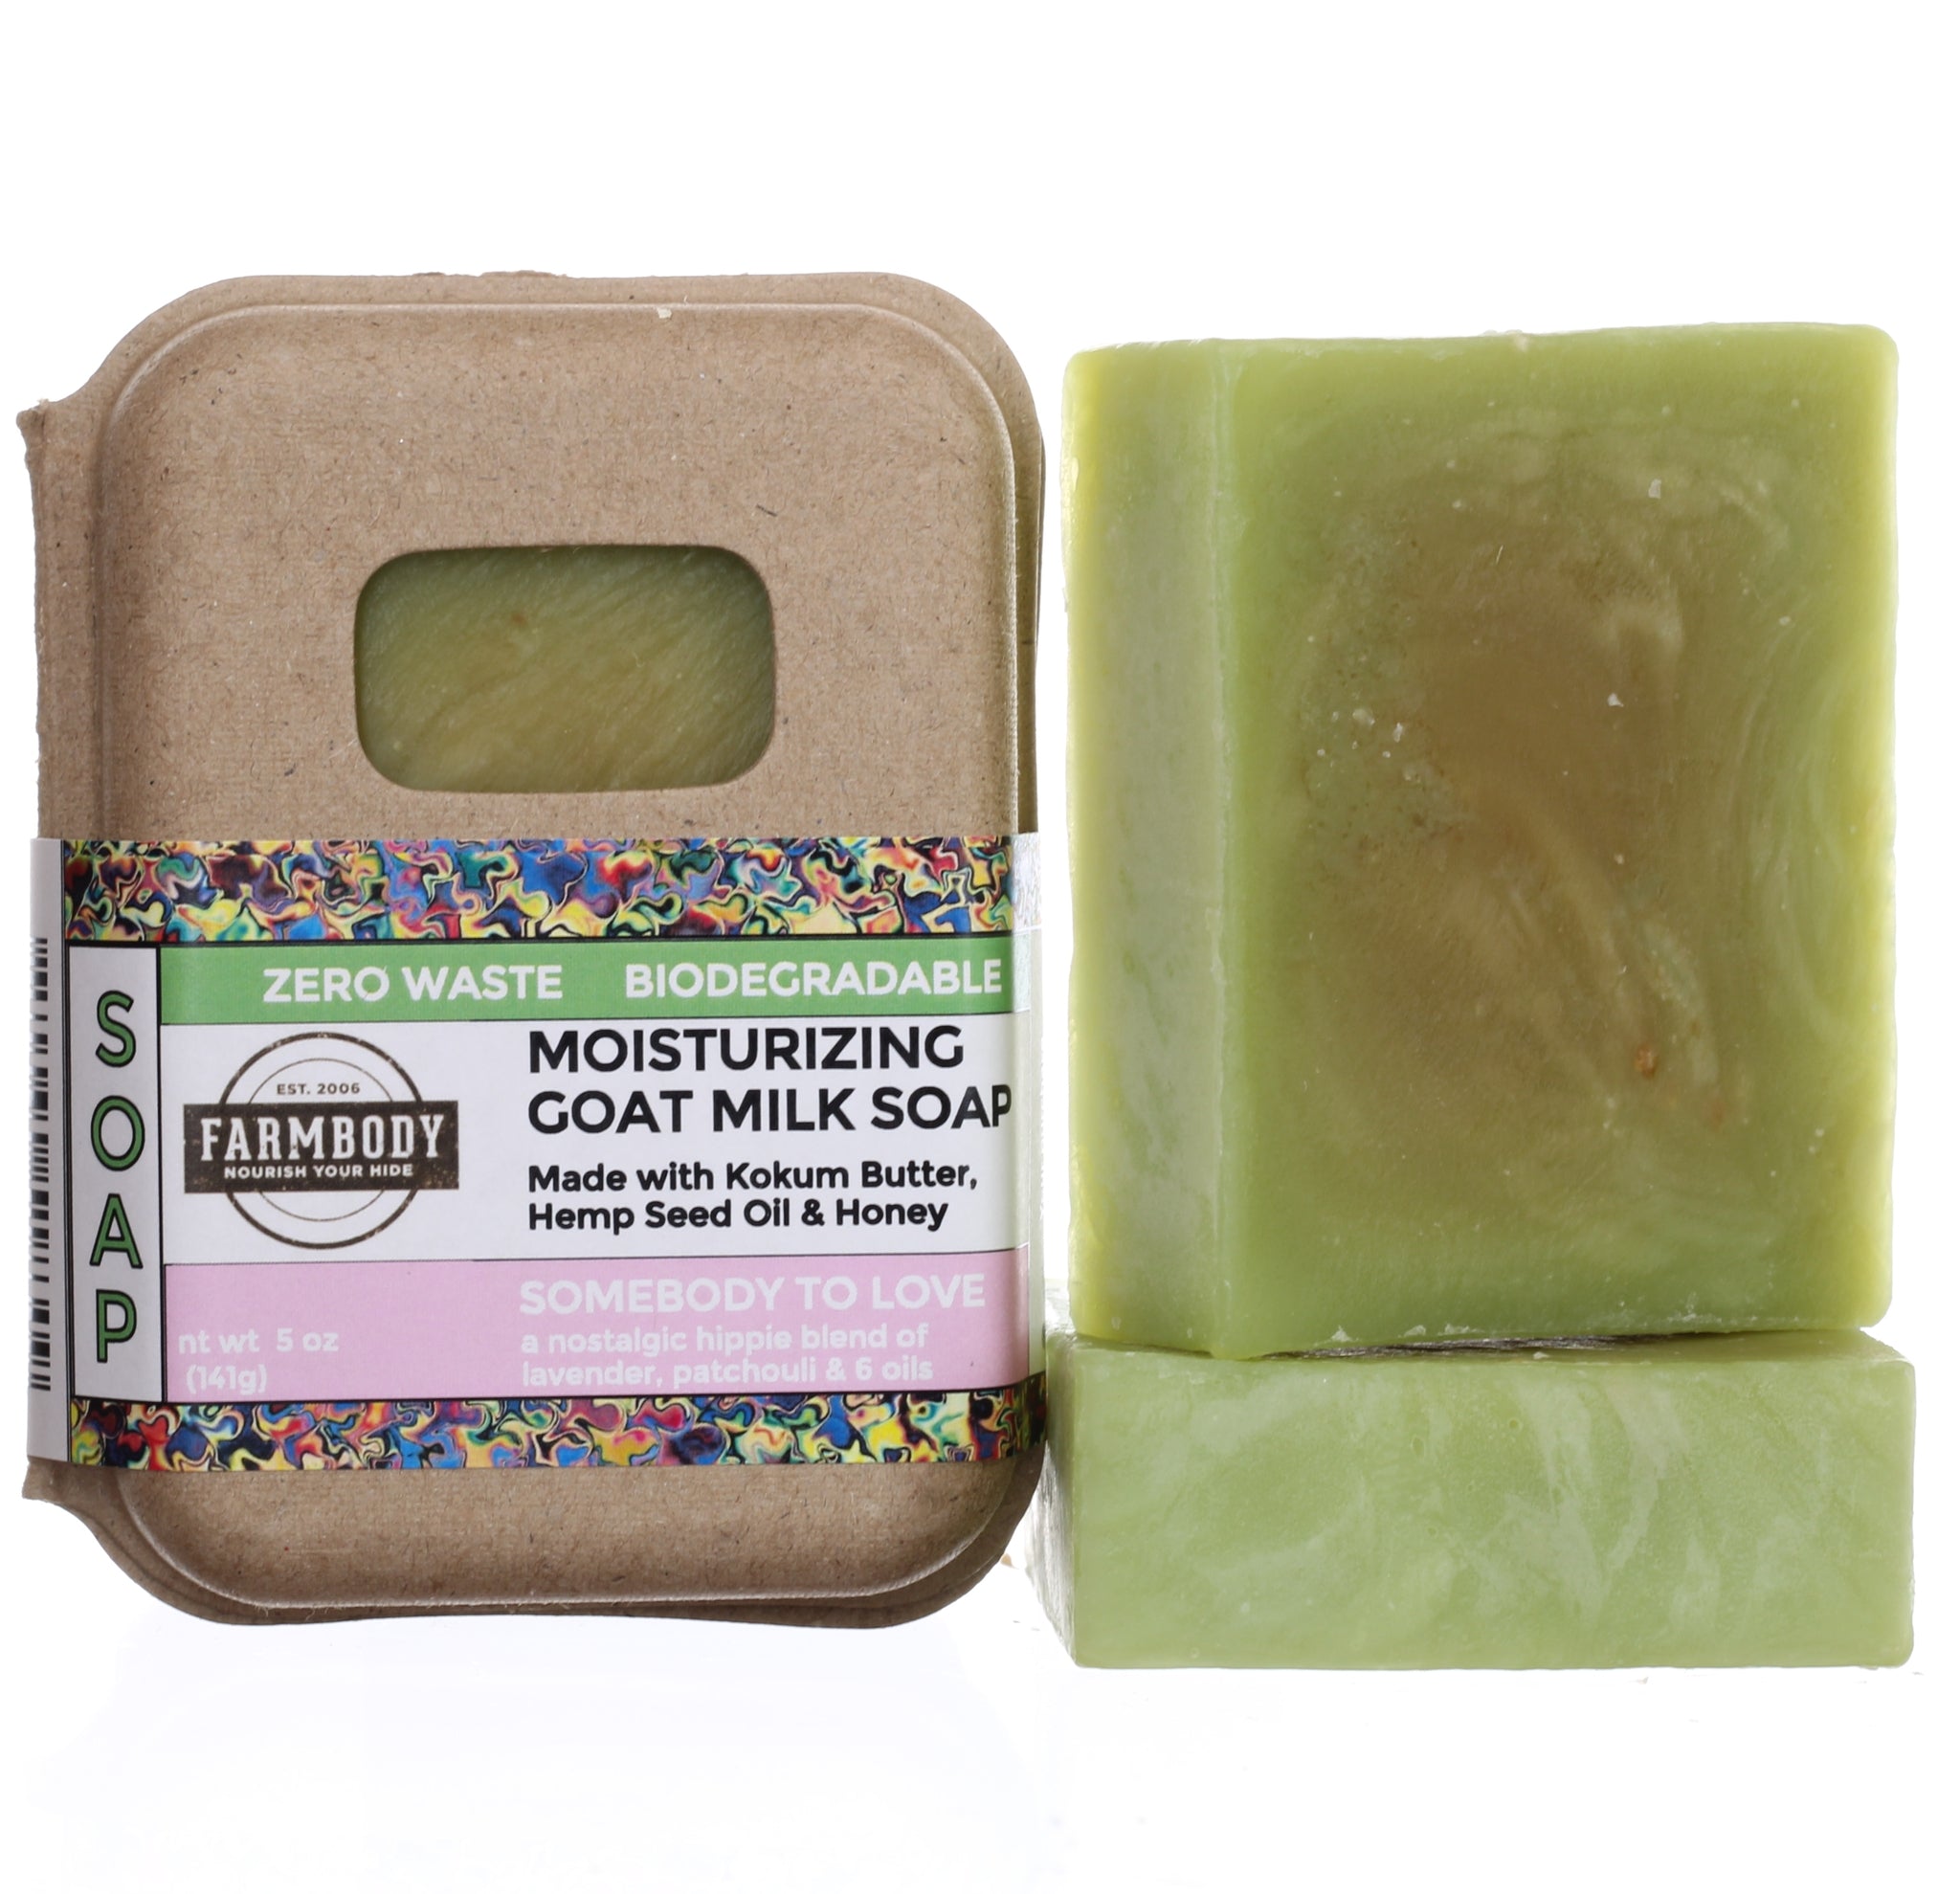 Moisturizing Goat Milk Bar Soap for Sensitive Skin | SOMEBODY TO LOVE - Farmbody